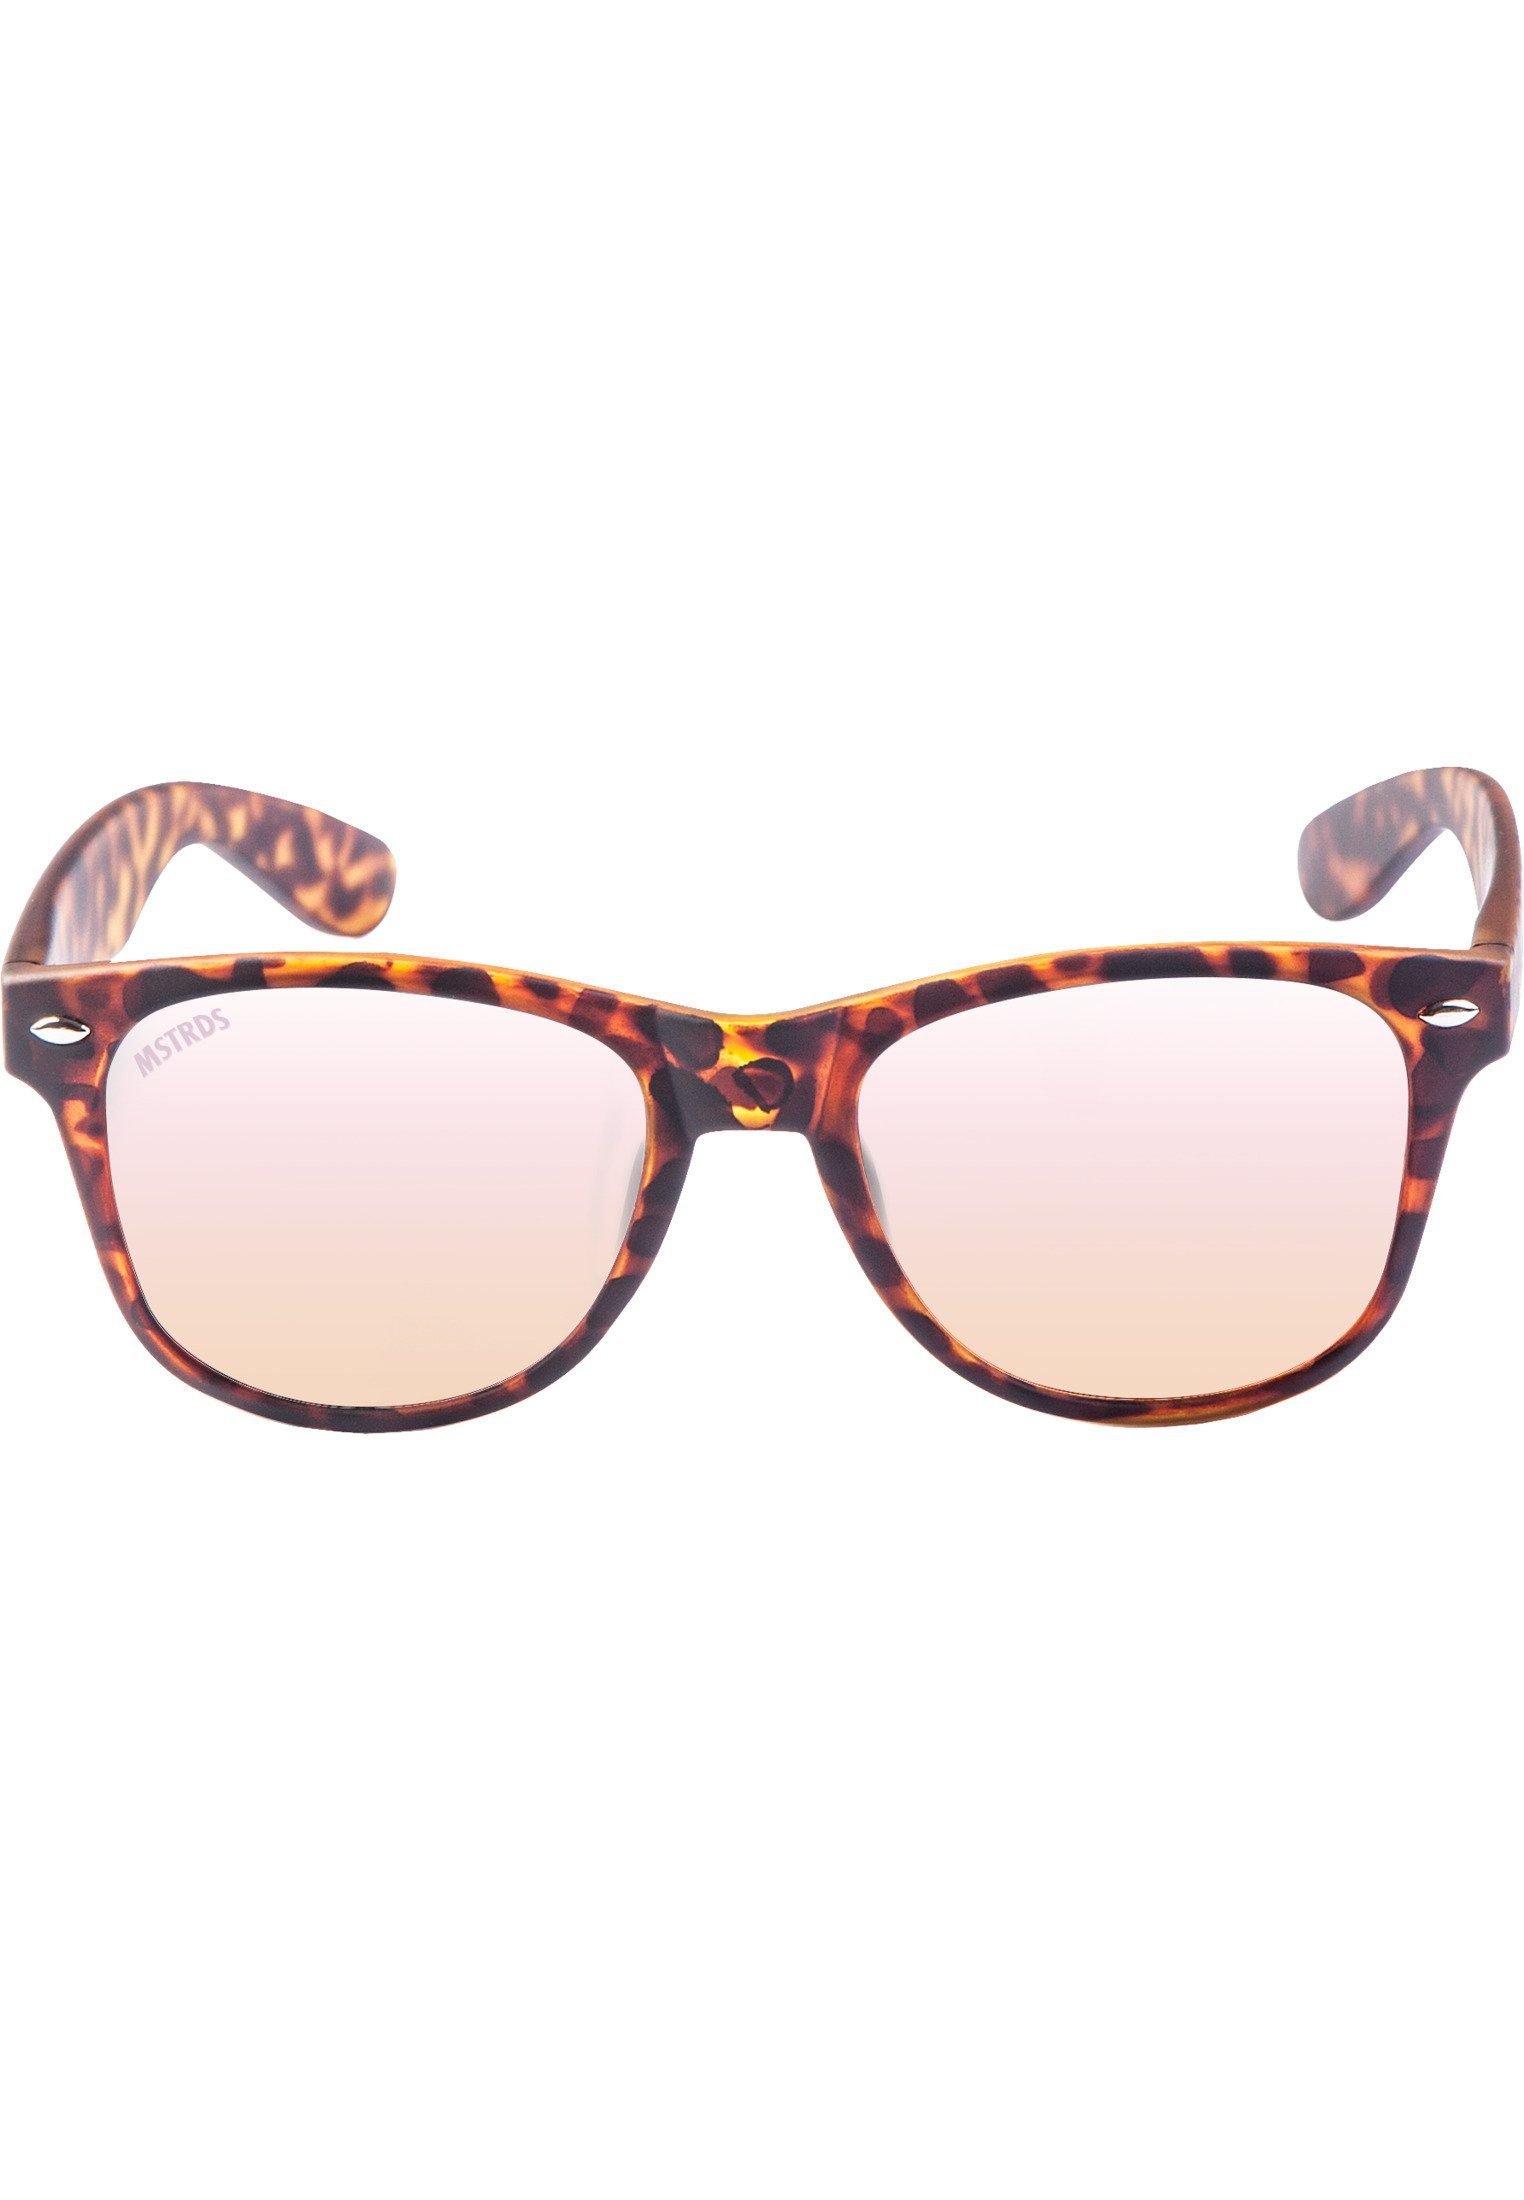 Accessoires MSTRDS Sonnenbrille havanna/rosé Likoma Sunglasses Youth